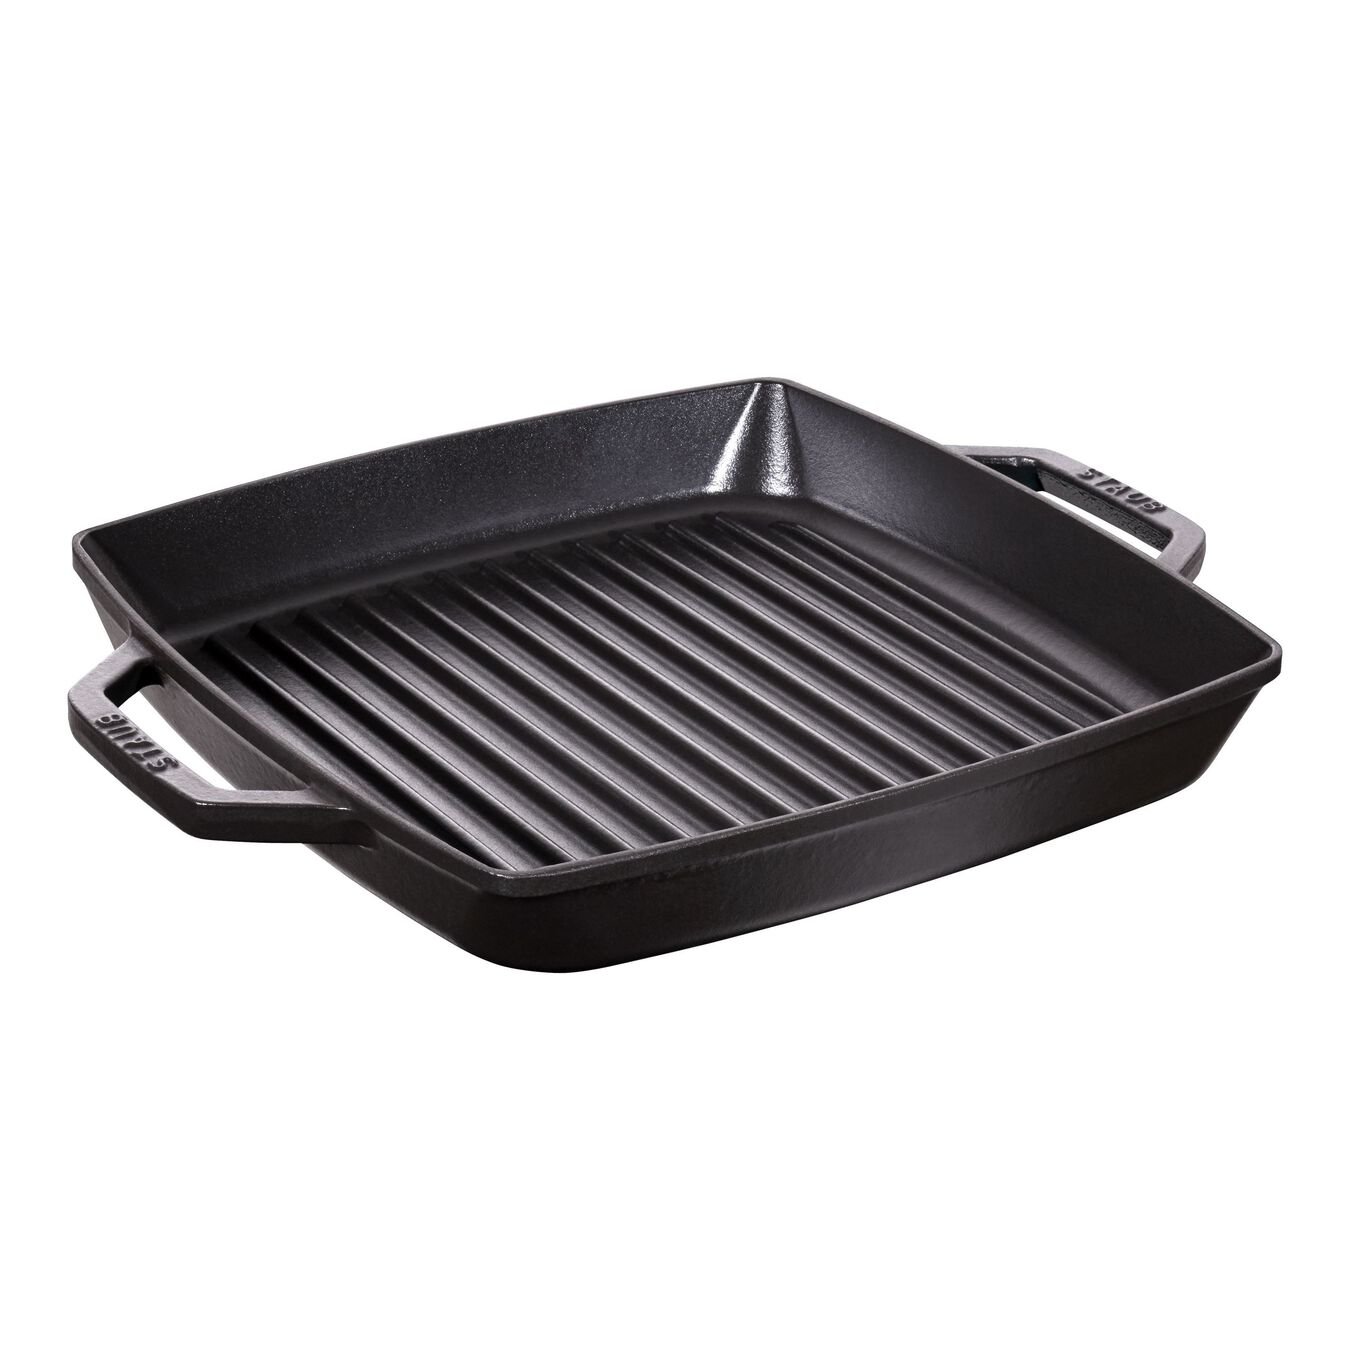 28 x 28 cm square Cast iron Grill pan black,,large 1